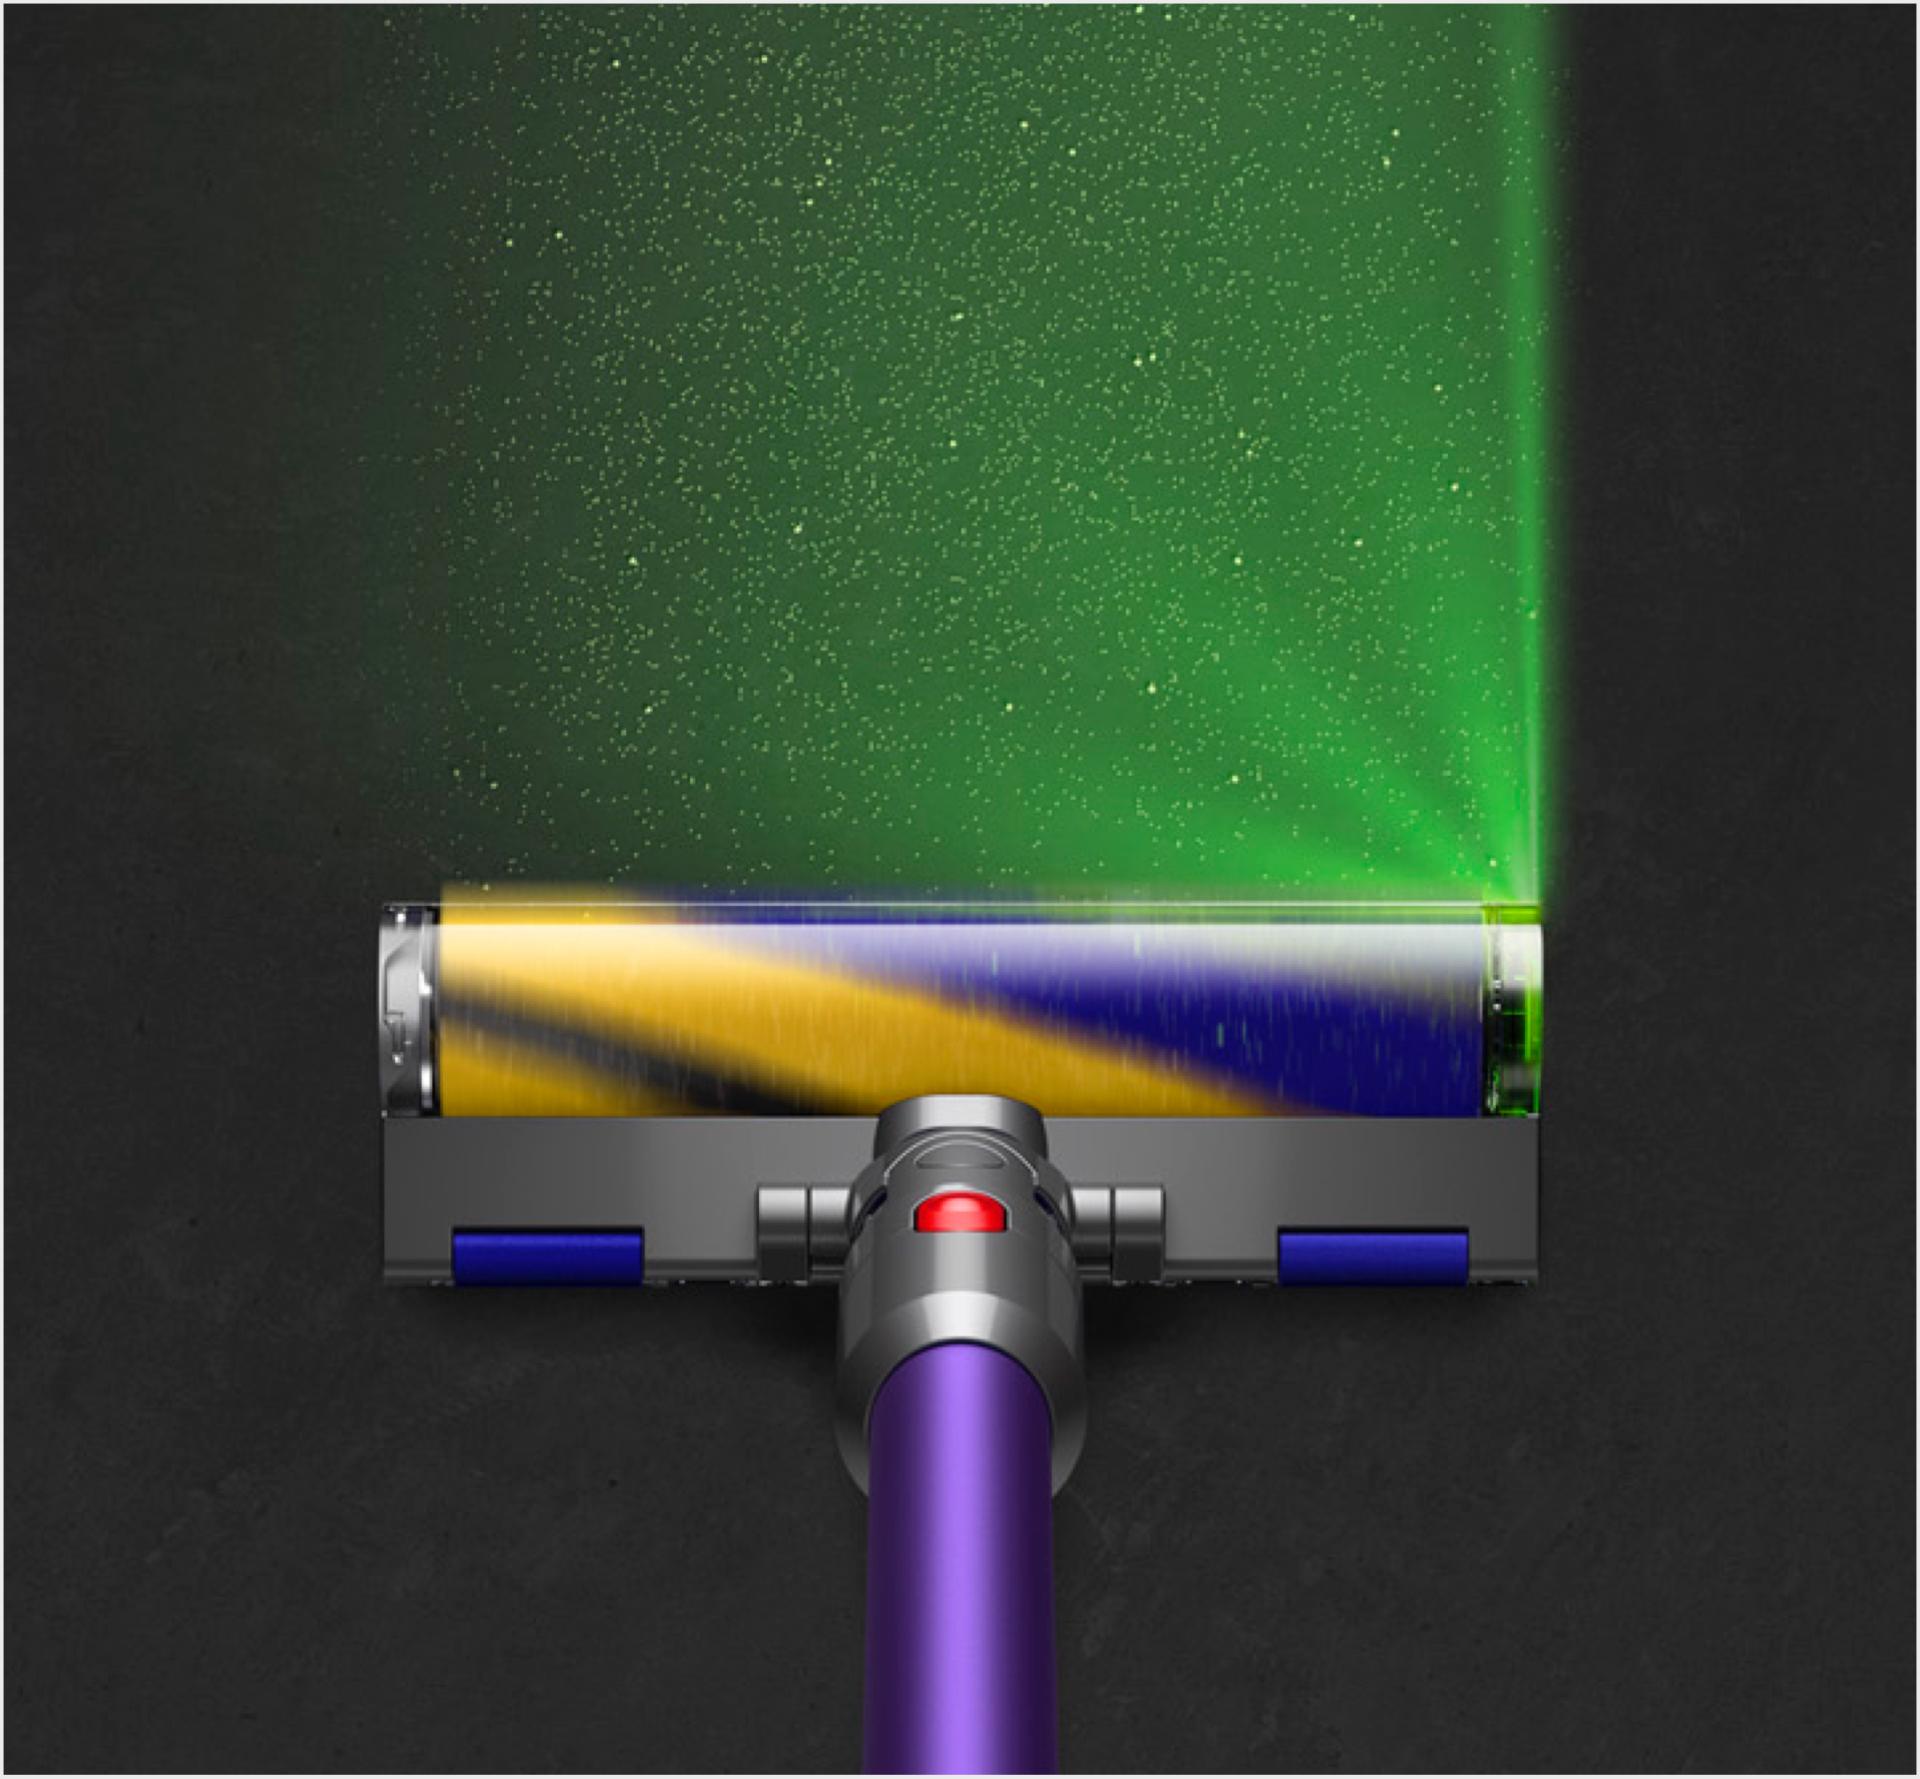 Fluffy Optic™ 智能光學偵測吸頭偵測硬地板上的塵垢。